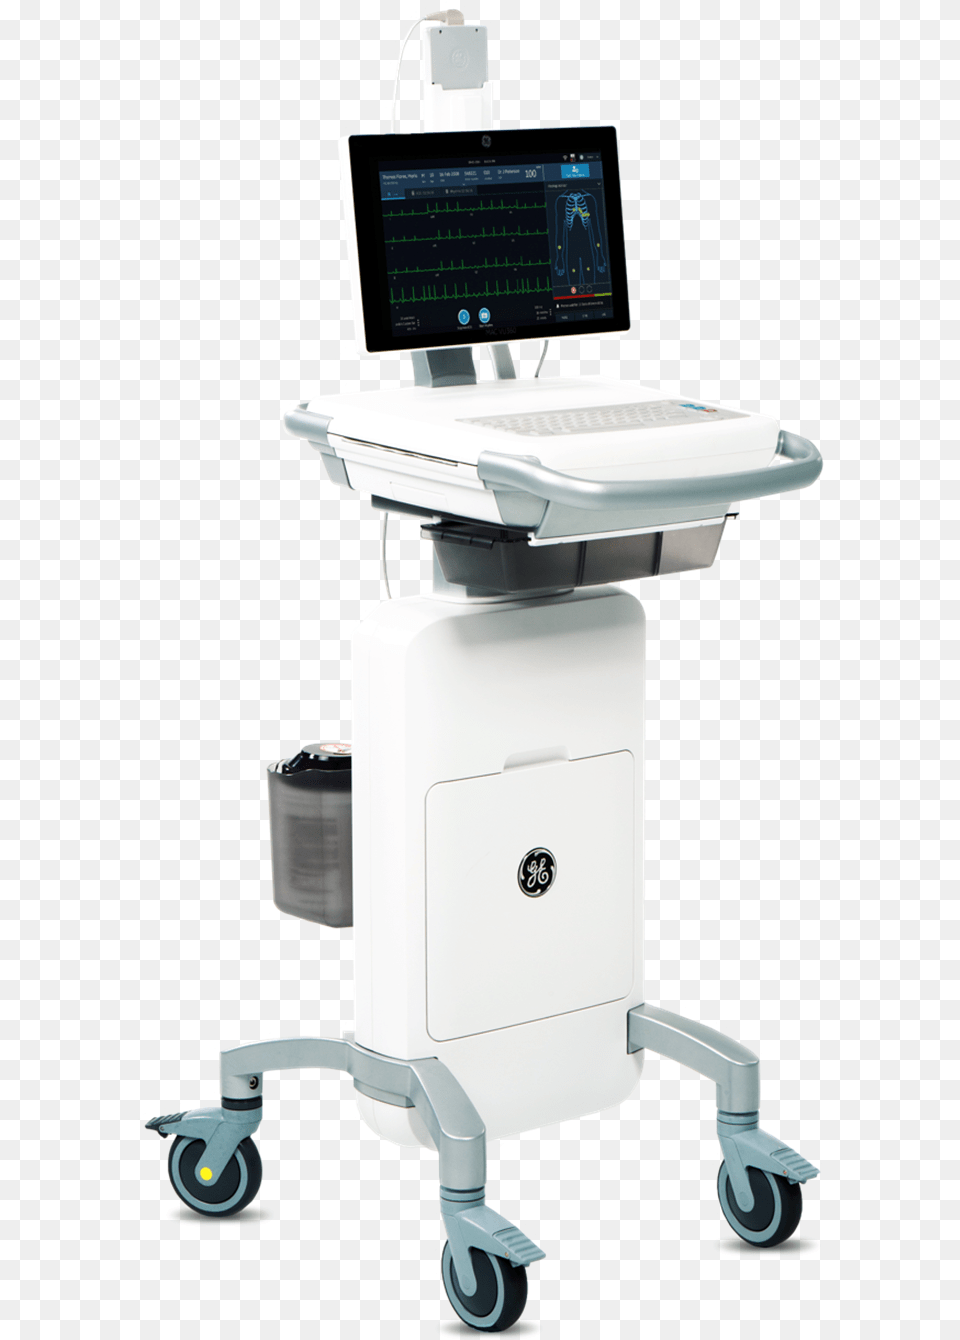 Mac Vu360 Ge Healthcare Ge Healthcare Mac, Architecture, Building, Hospital, Hardware Free Transparent Png